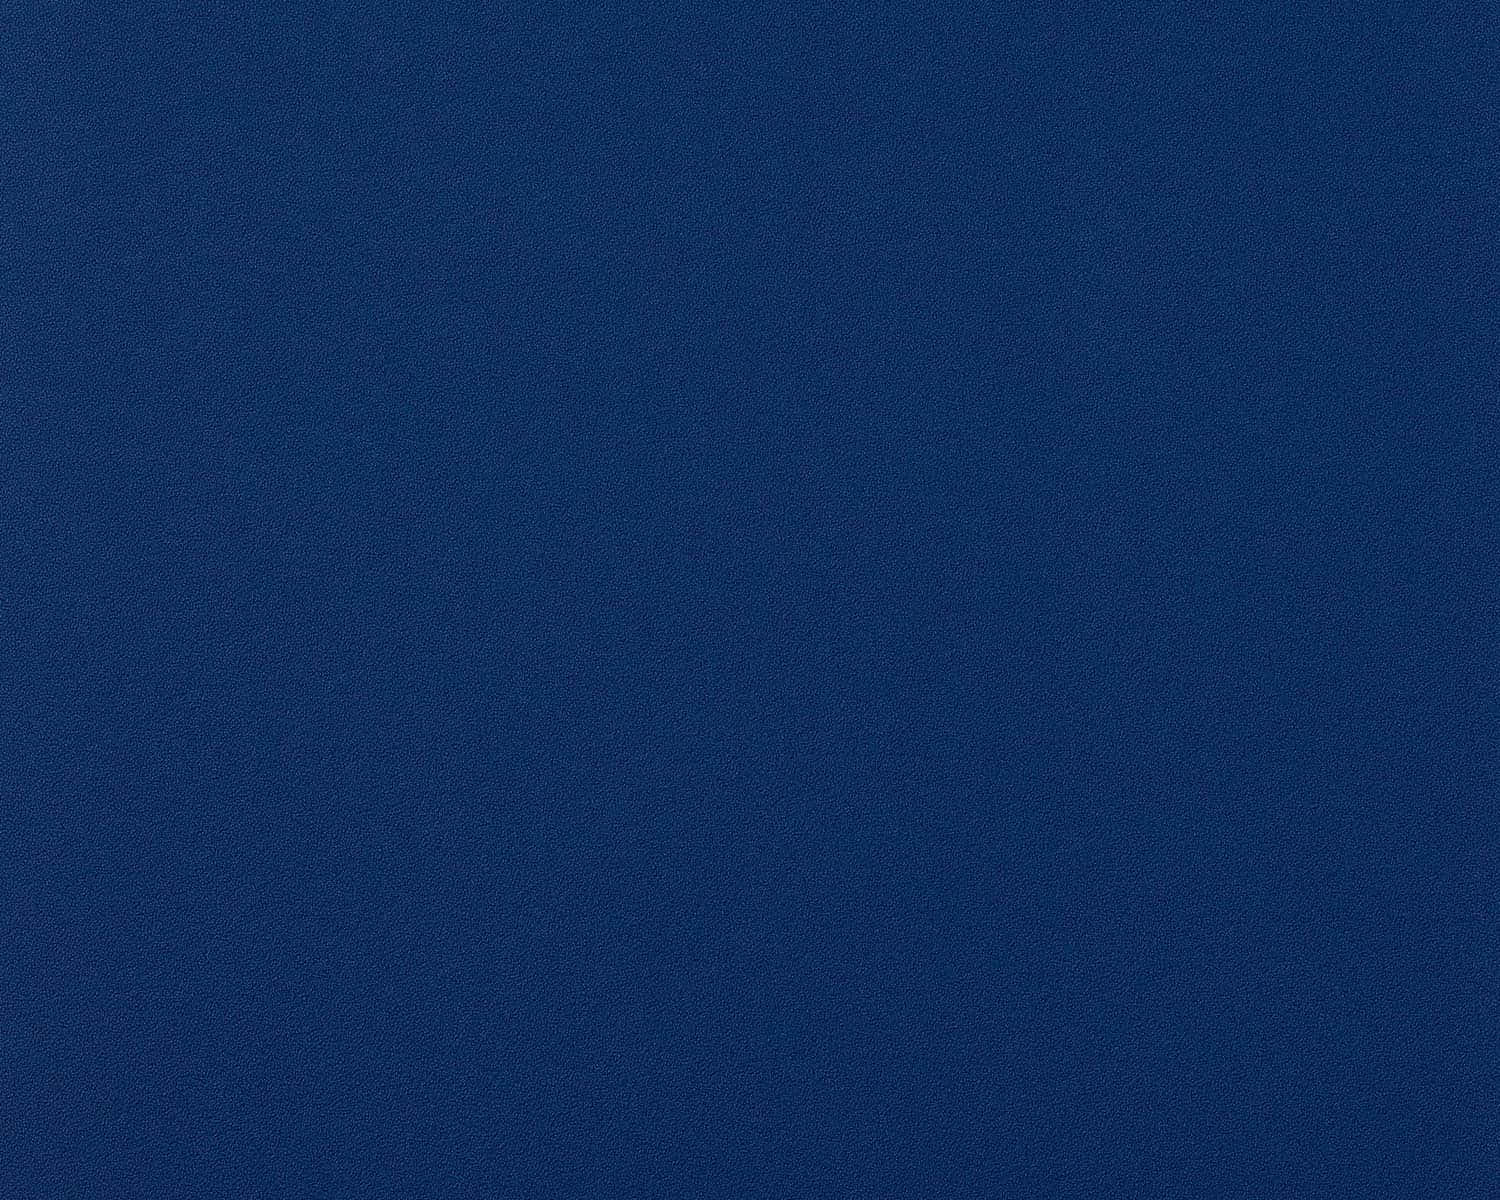 Straightforward Navy Blue Background